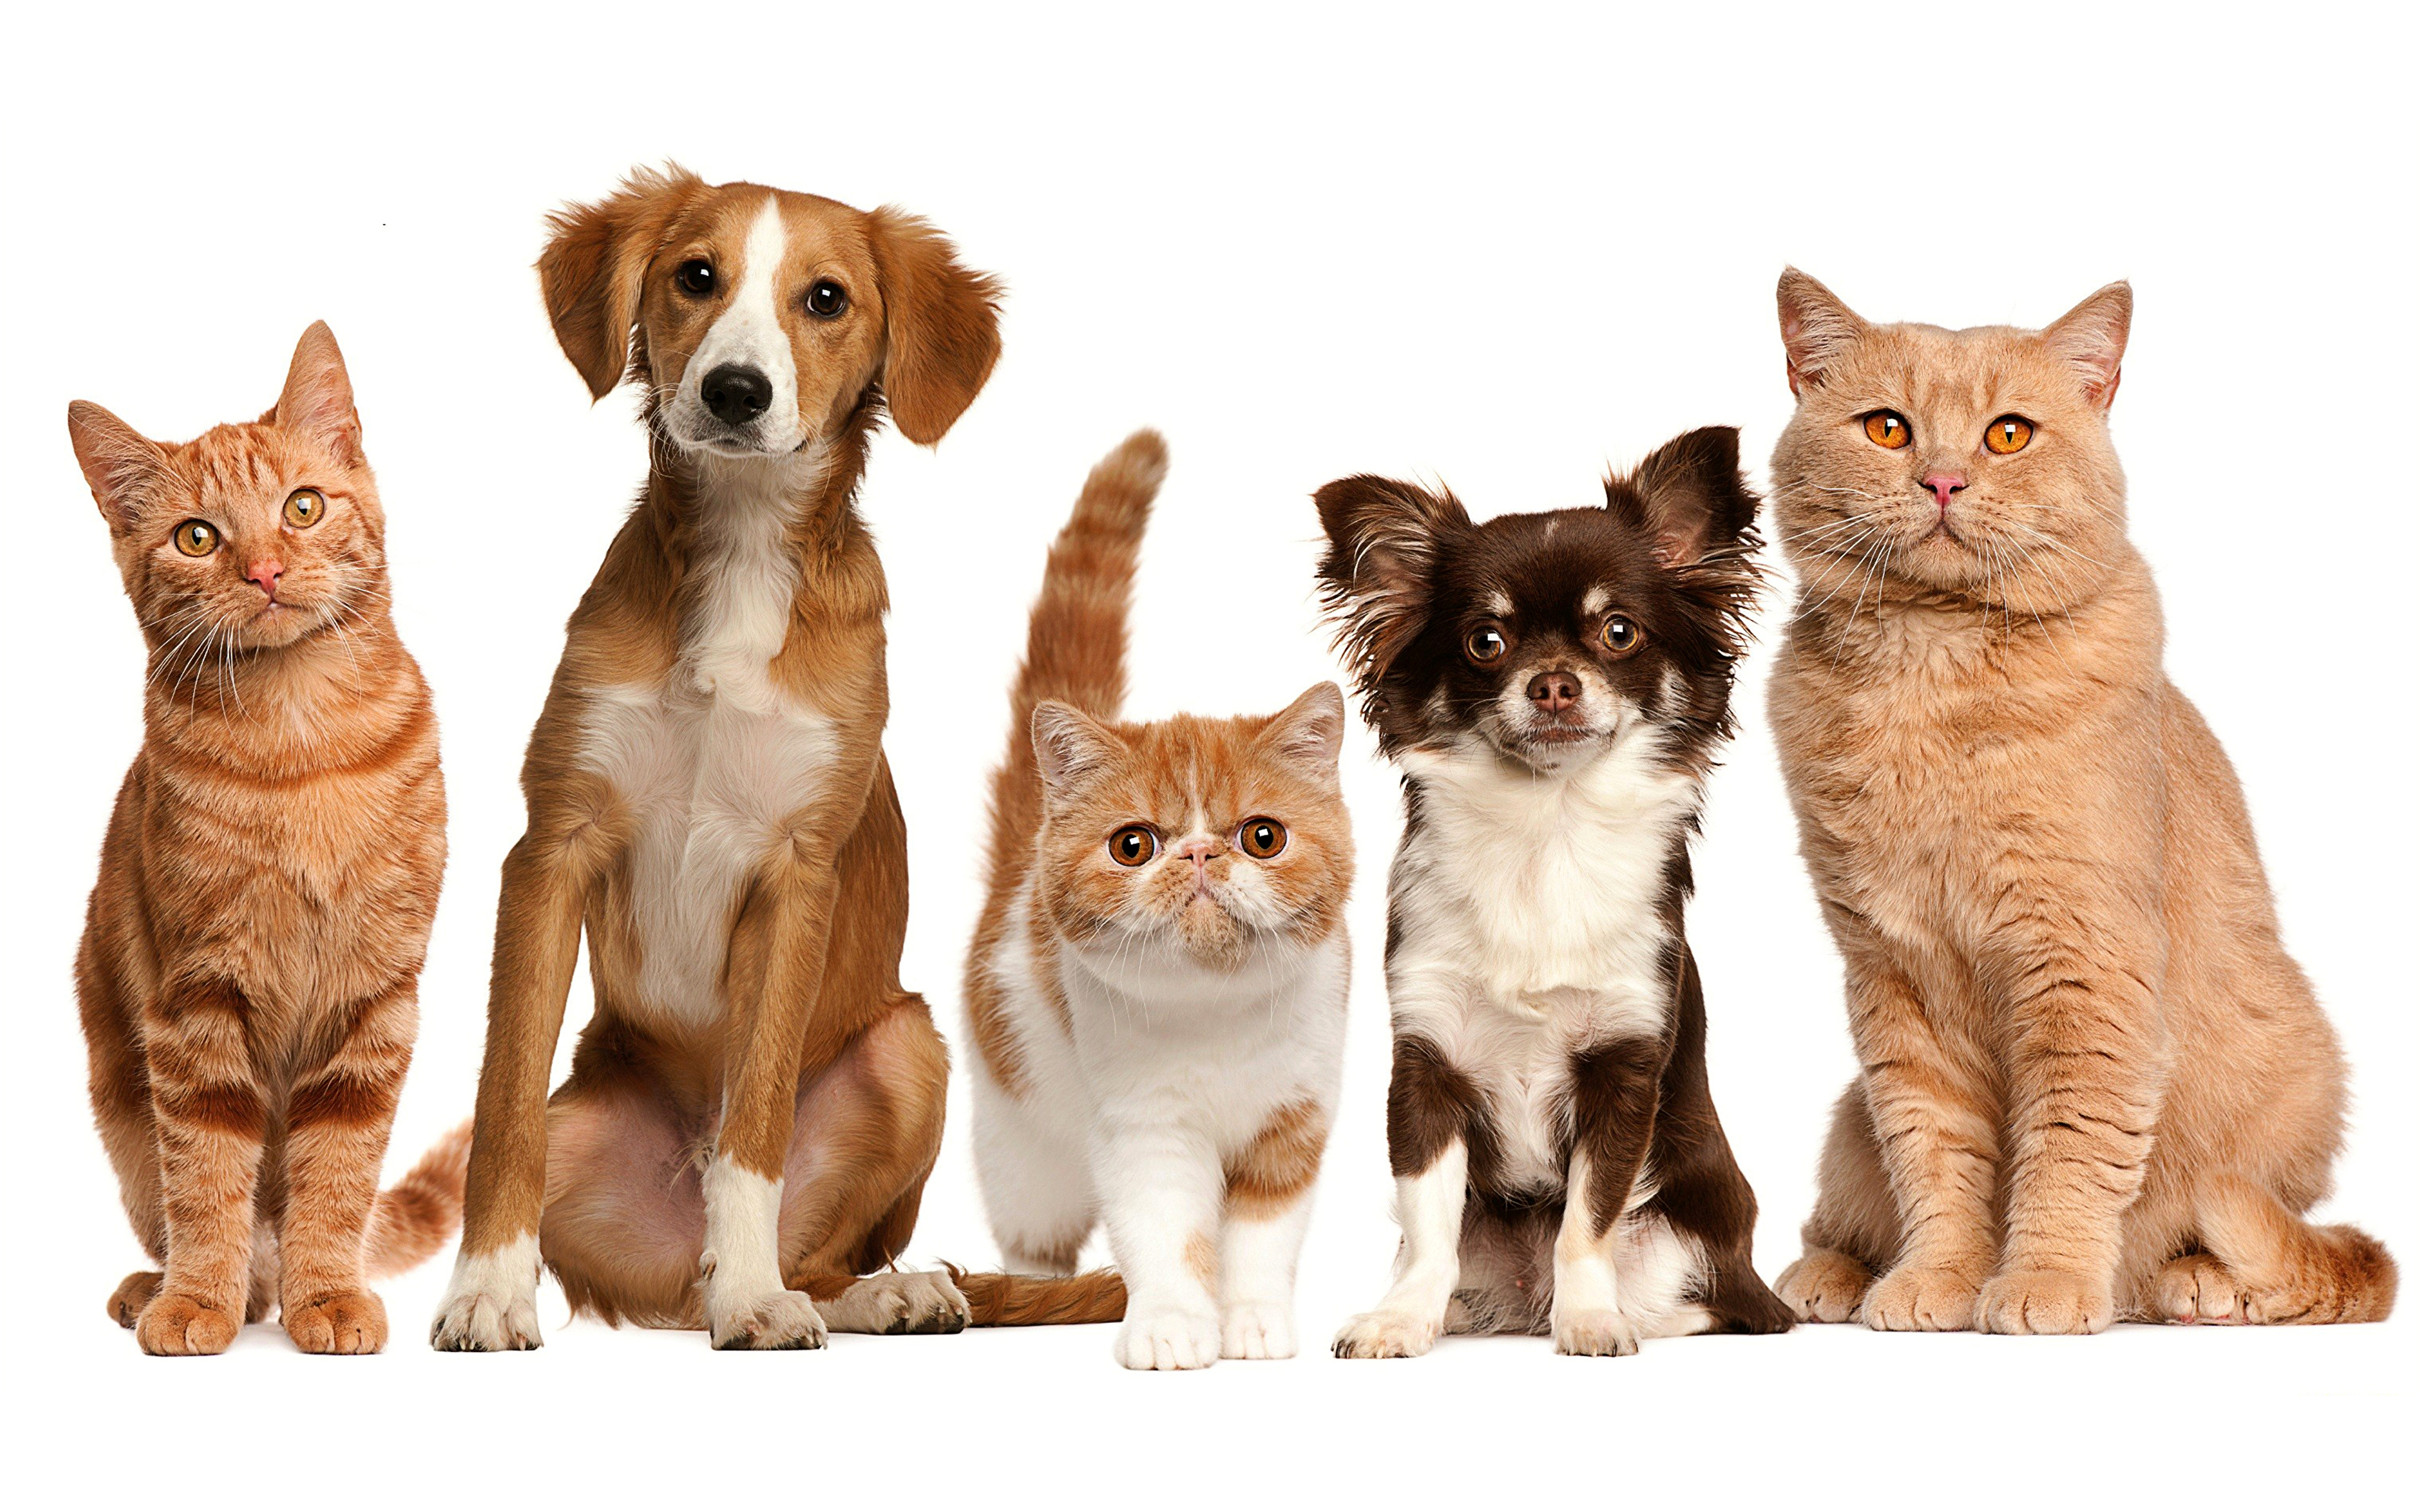 Животные породы кошек и собак. Собачки и кошечки. Домашние животные кошки и собаки. Картинки кошек и собак. Кошка и собака на белом фоне.